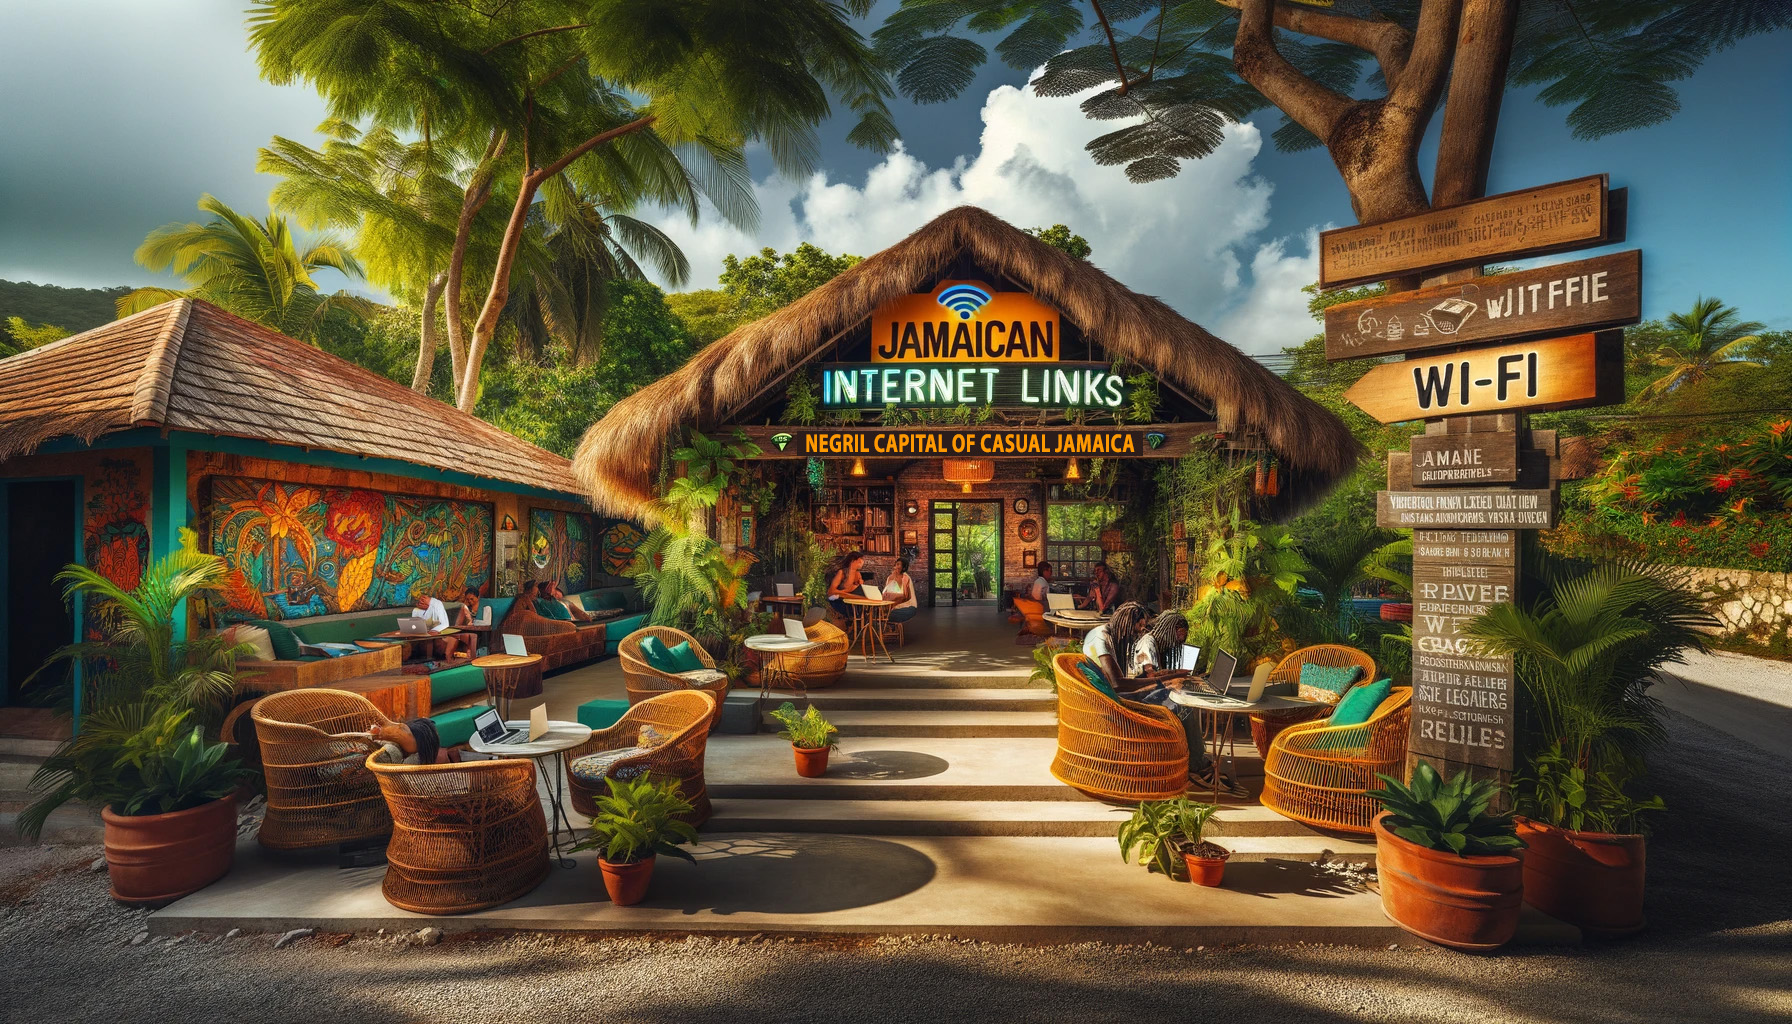 Jamaican Internet Links - Negril Capital of Casual Jamaica